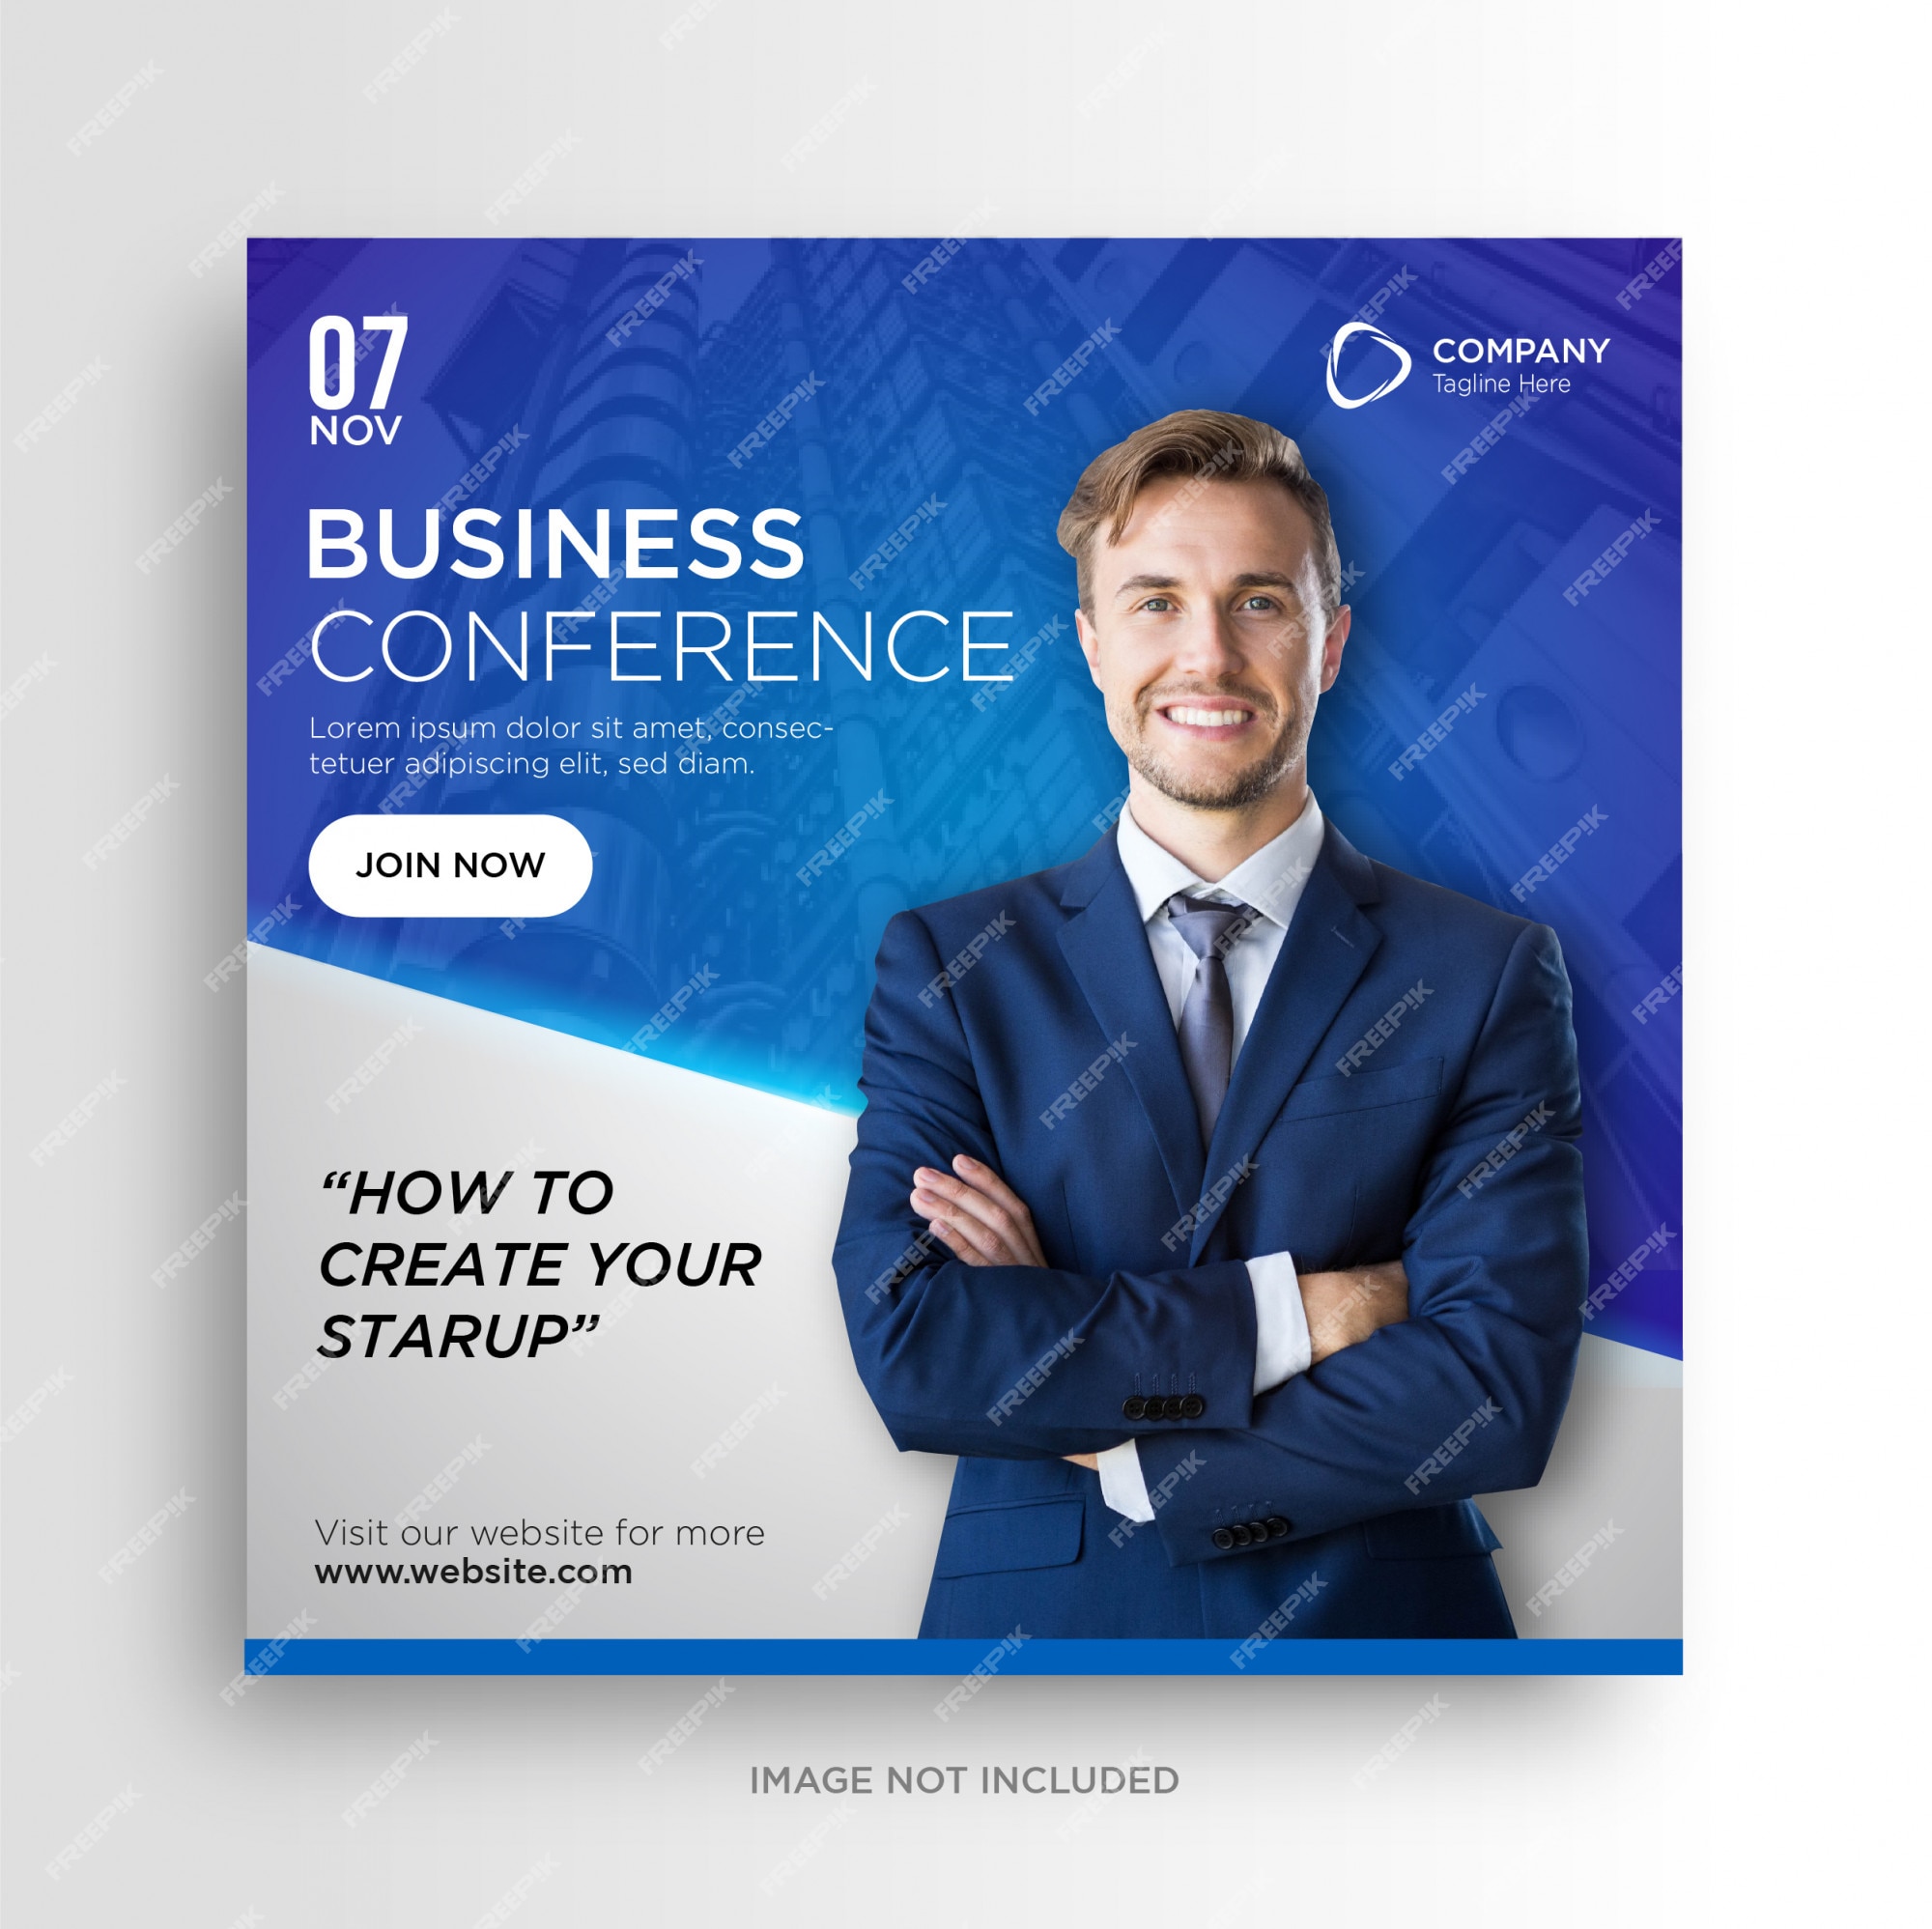 Premium Vector | Business conference social media banner square flyer